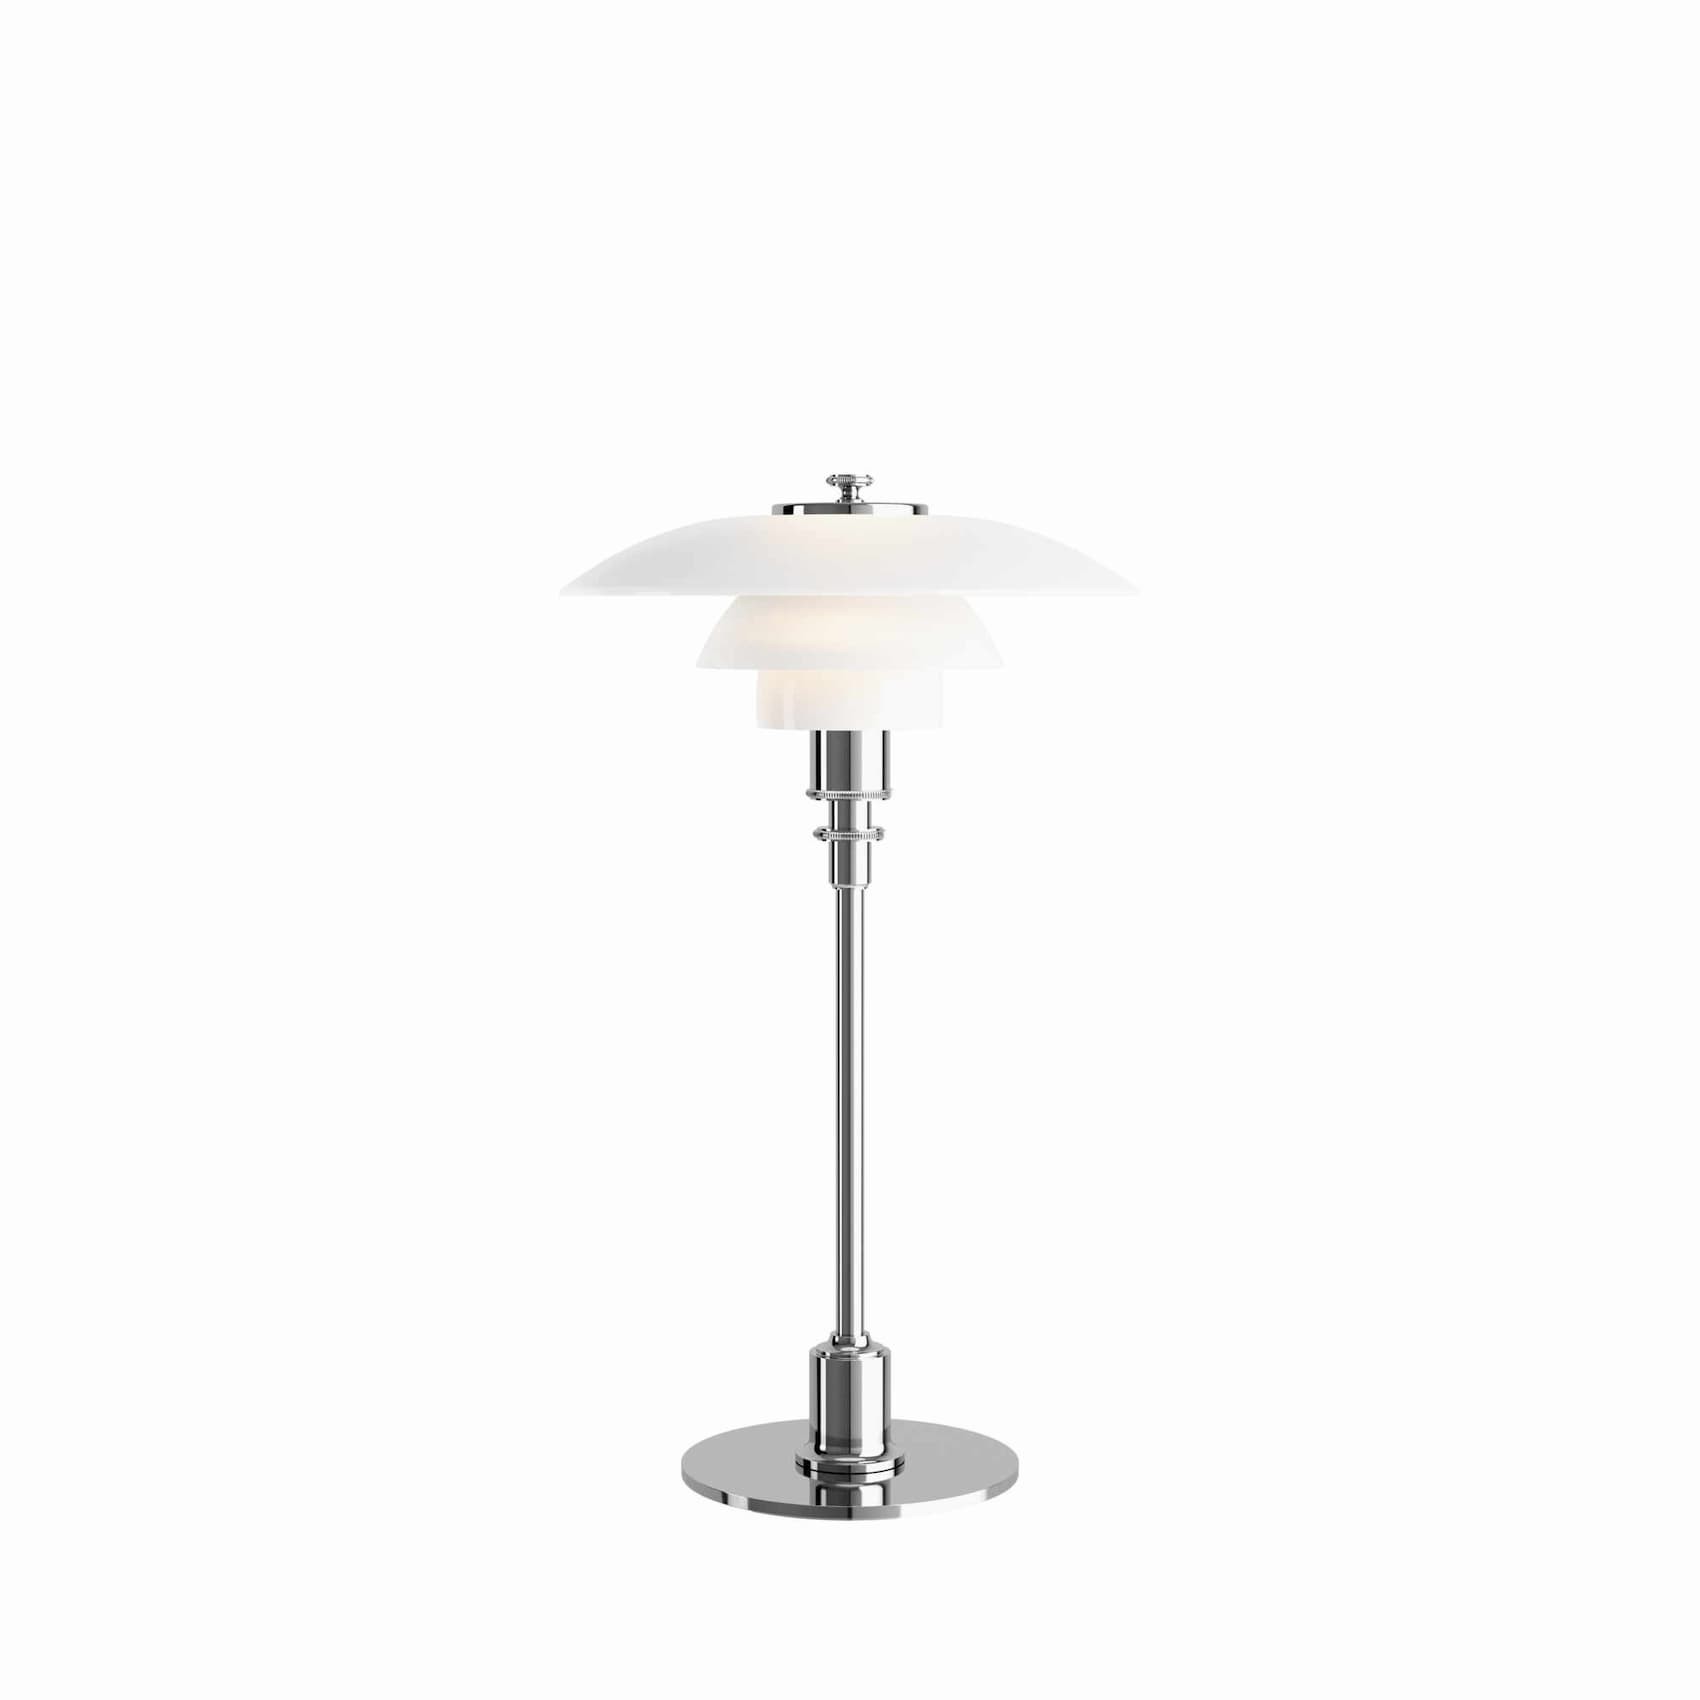 stoomboot Panorama Concentratie Louis Poulsen PH 2/1 table lamp | Buy online at Deplain.com